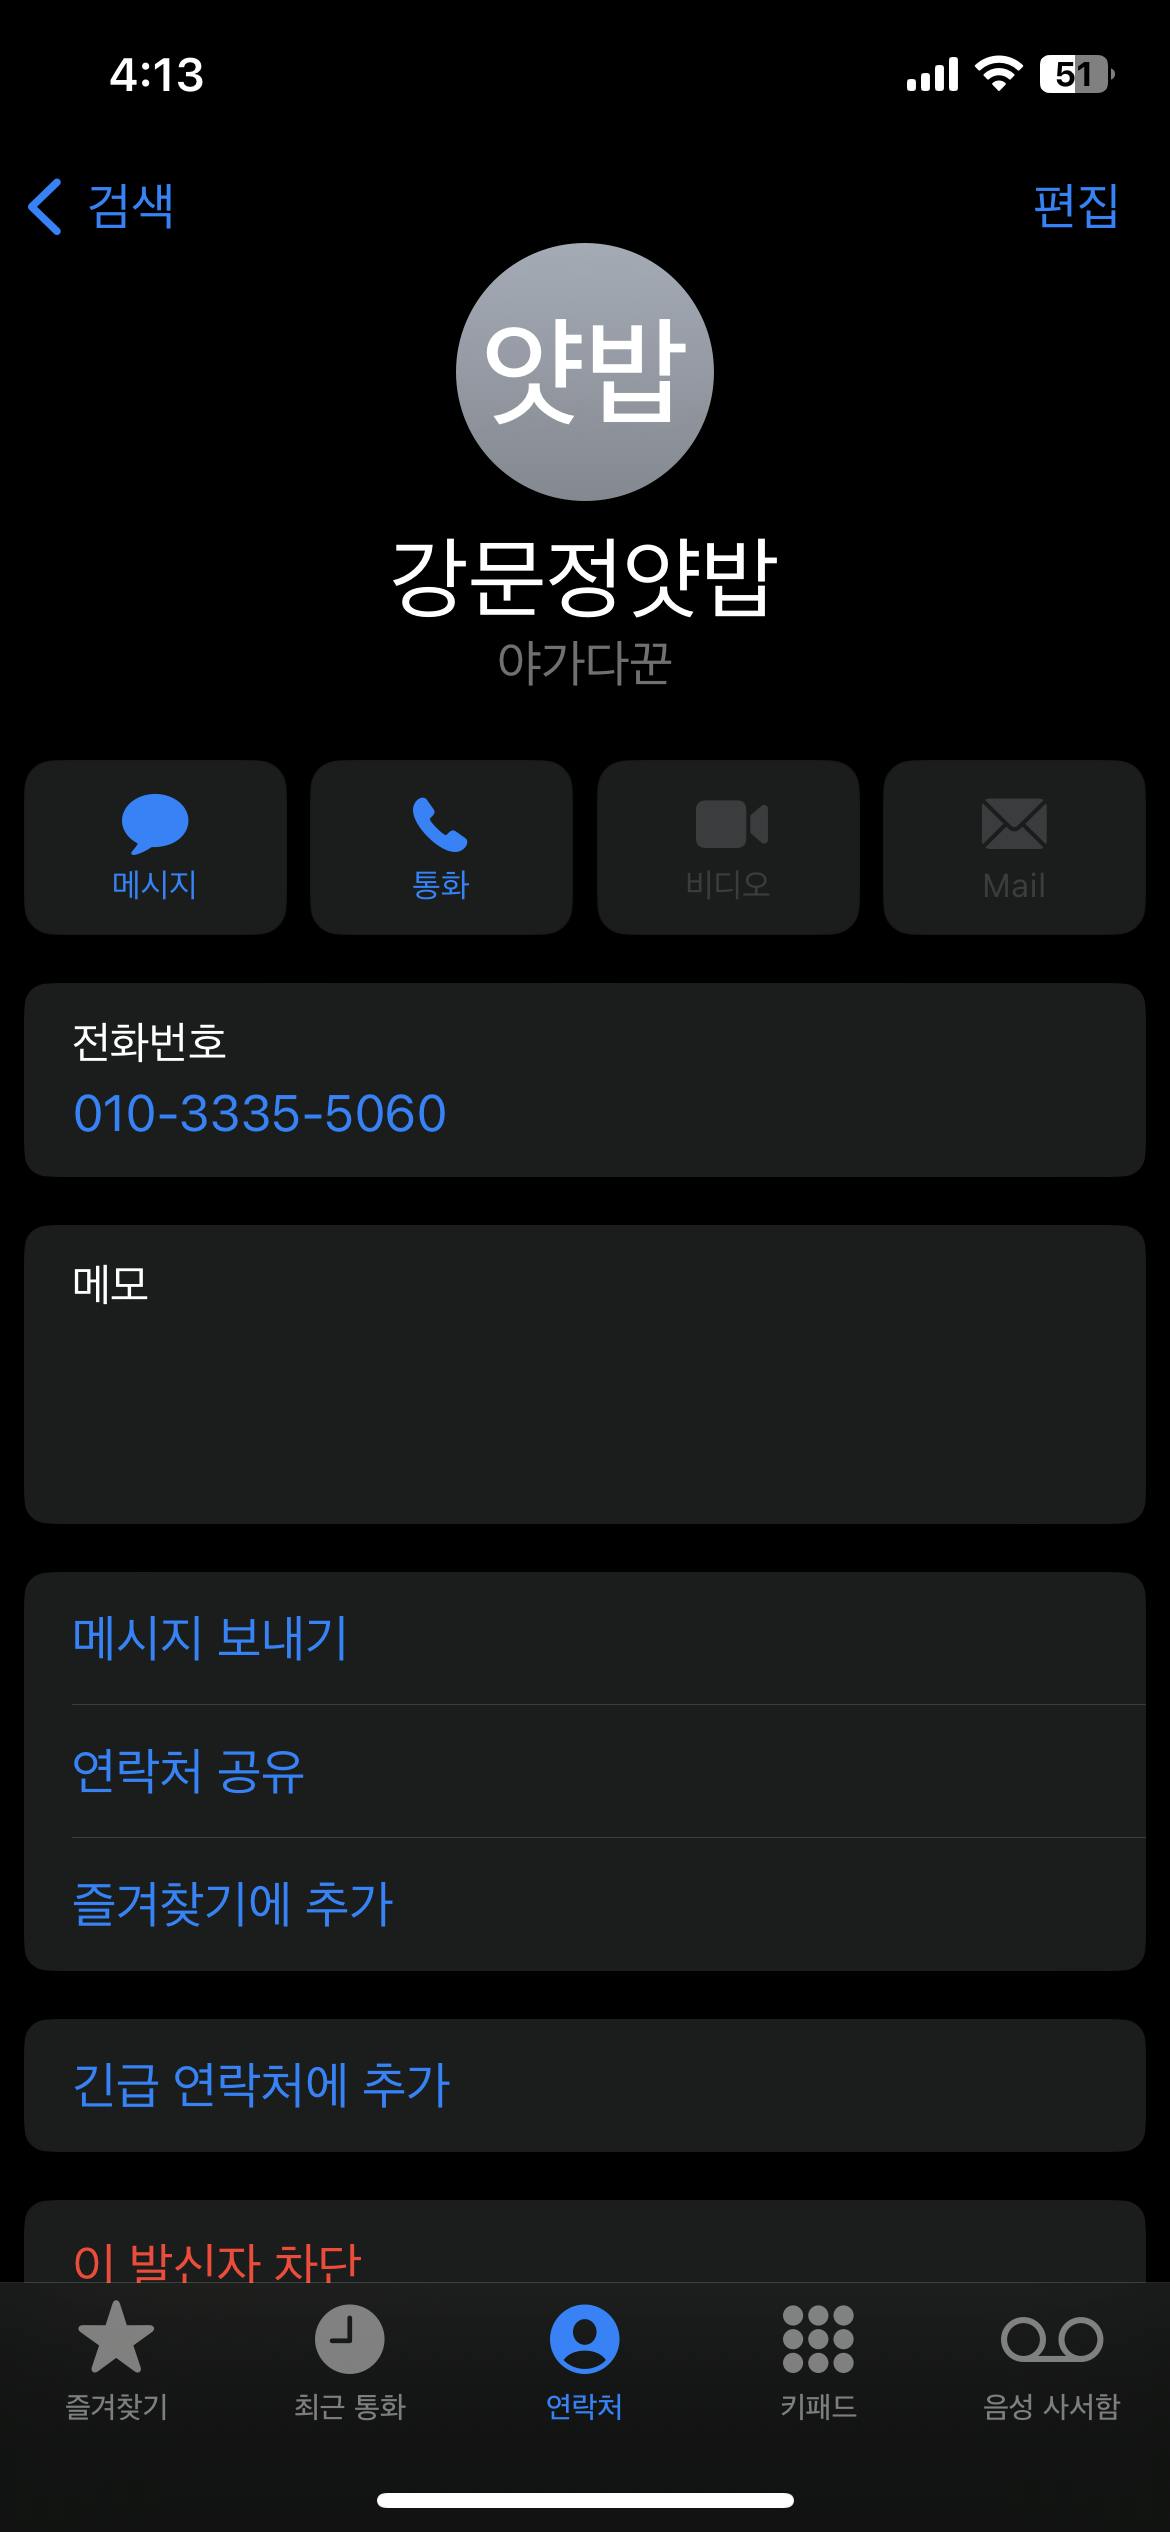 seonkwang-contact-screen-shot.png